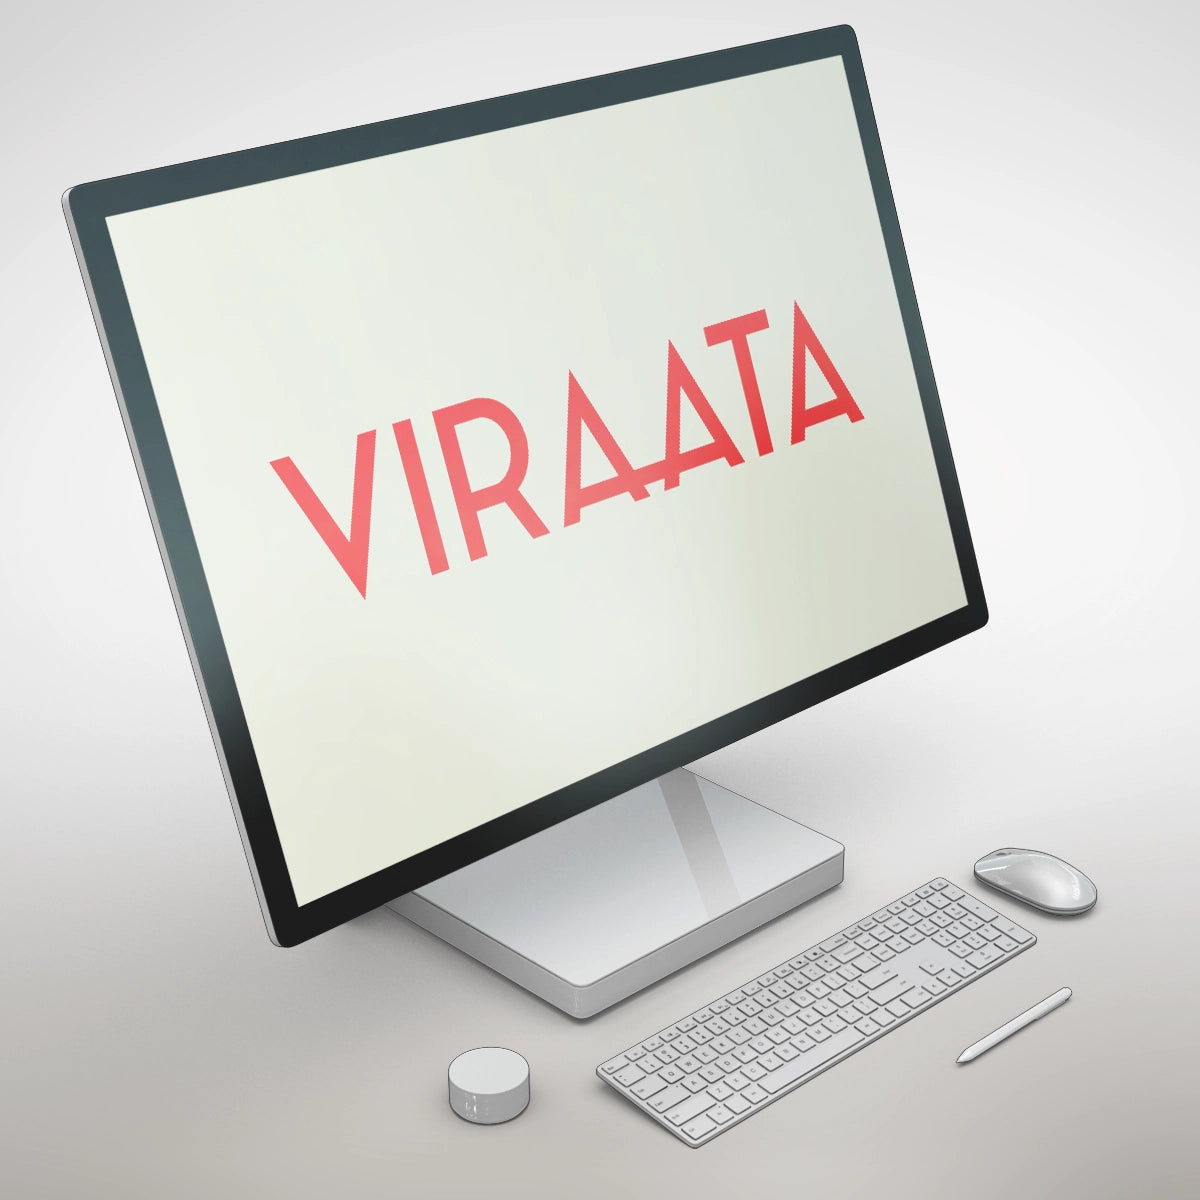 viraata.com